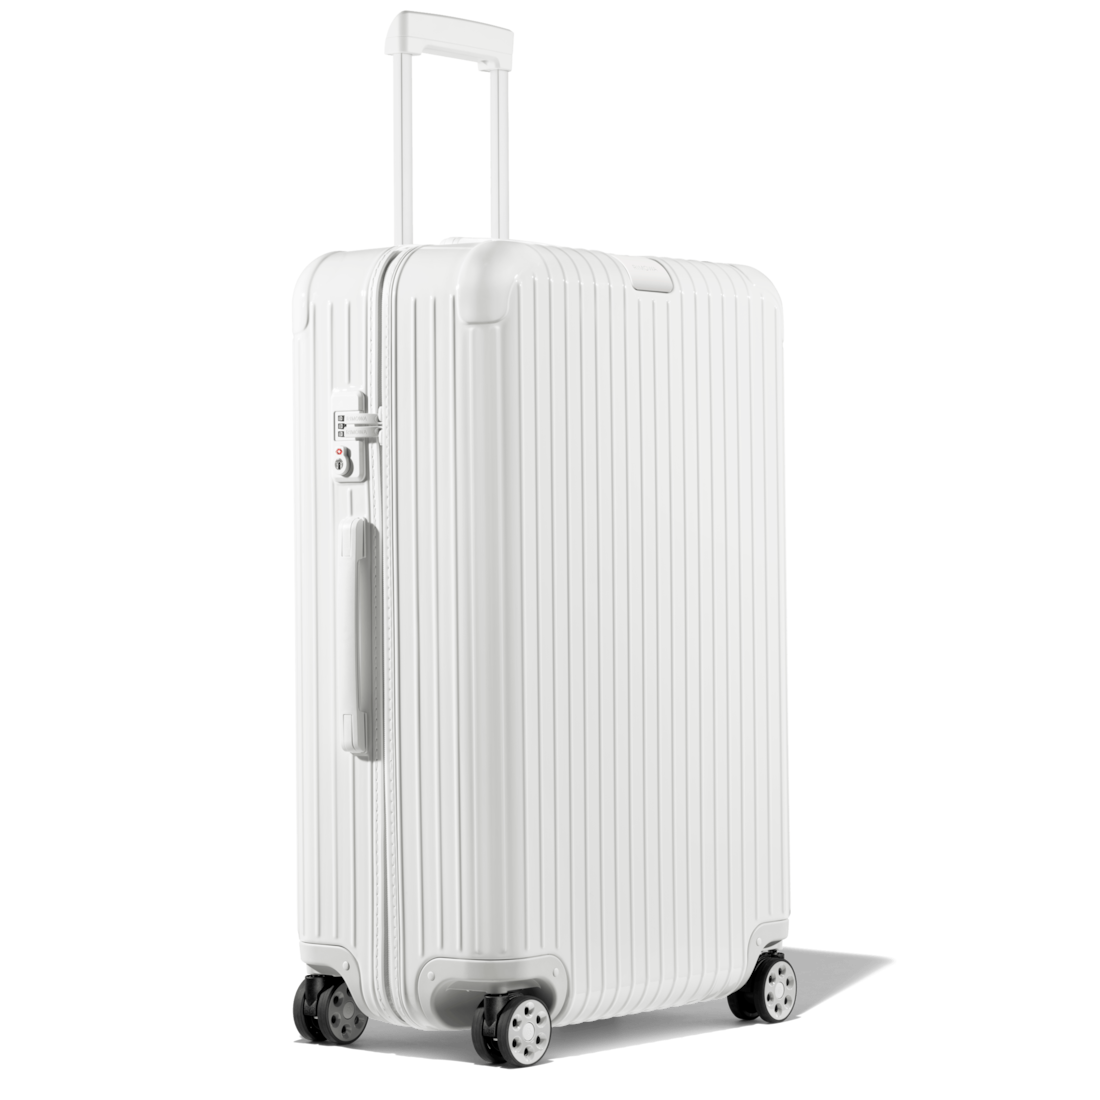 rimowa suitcase weight